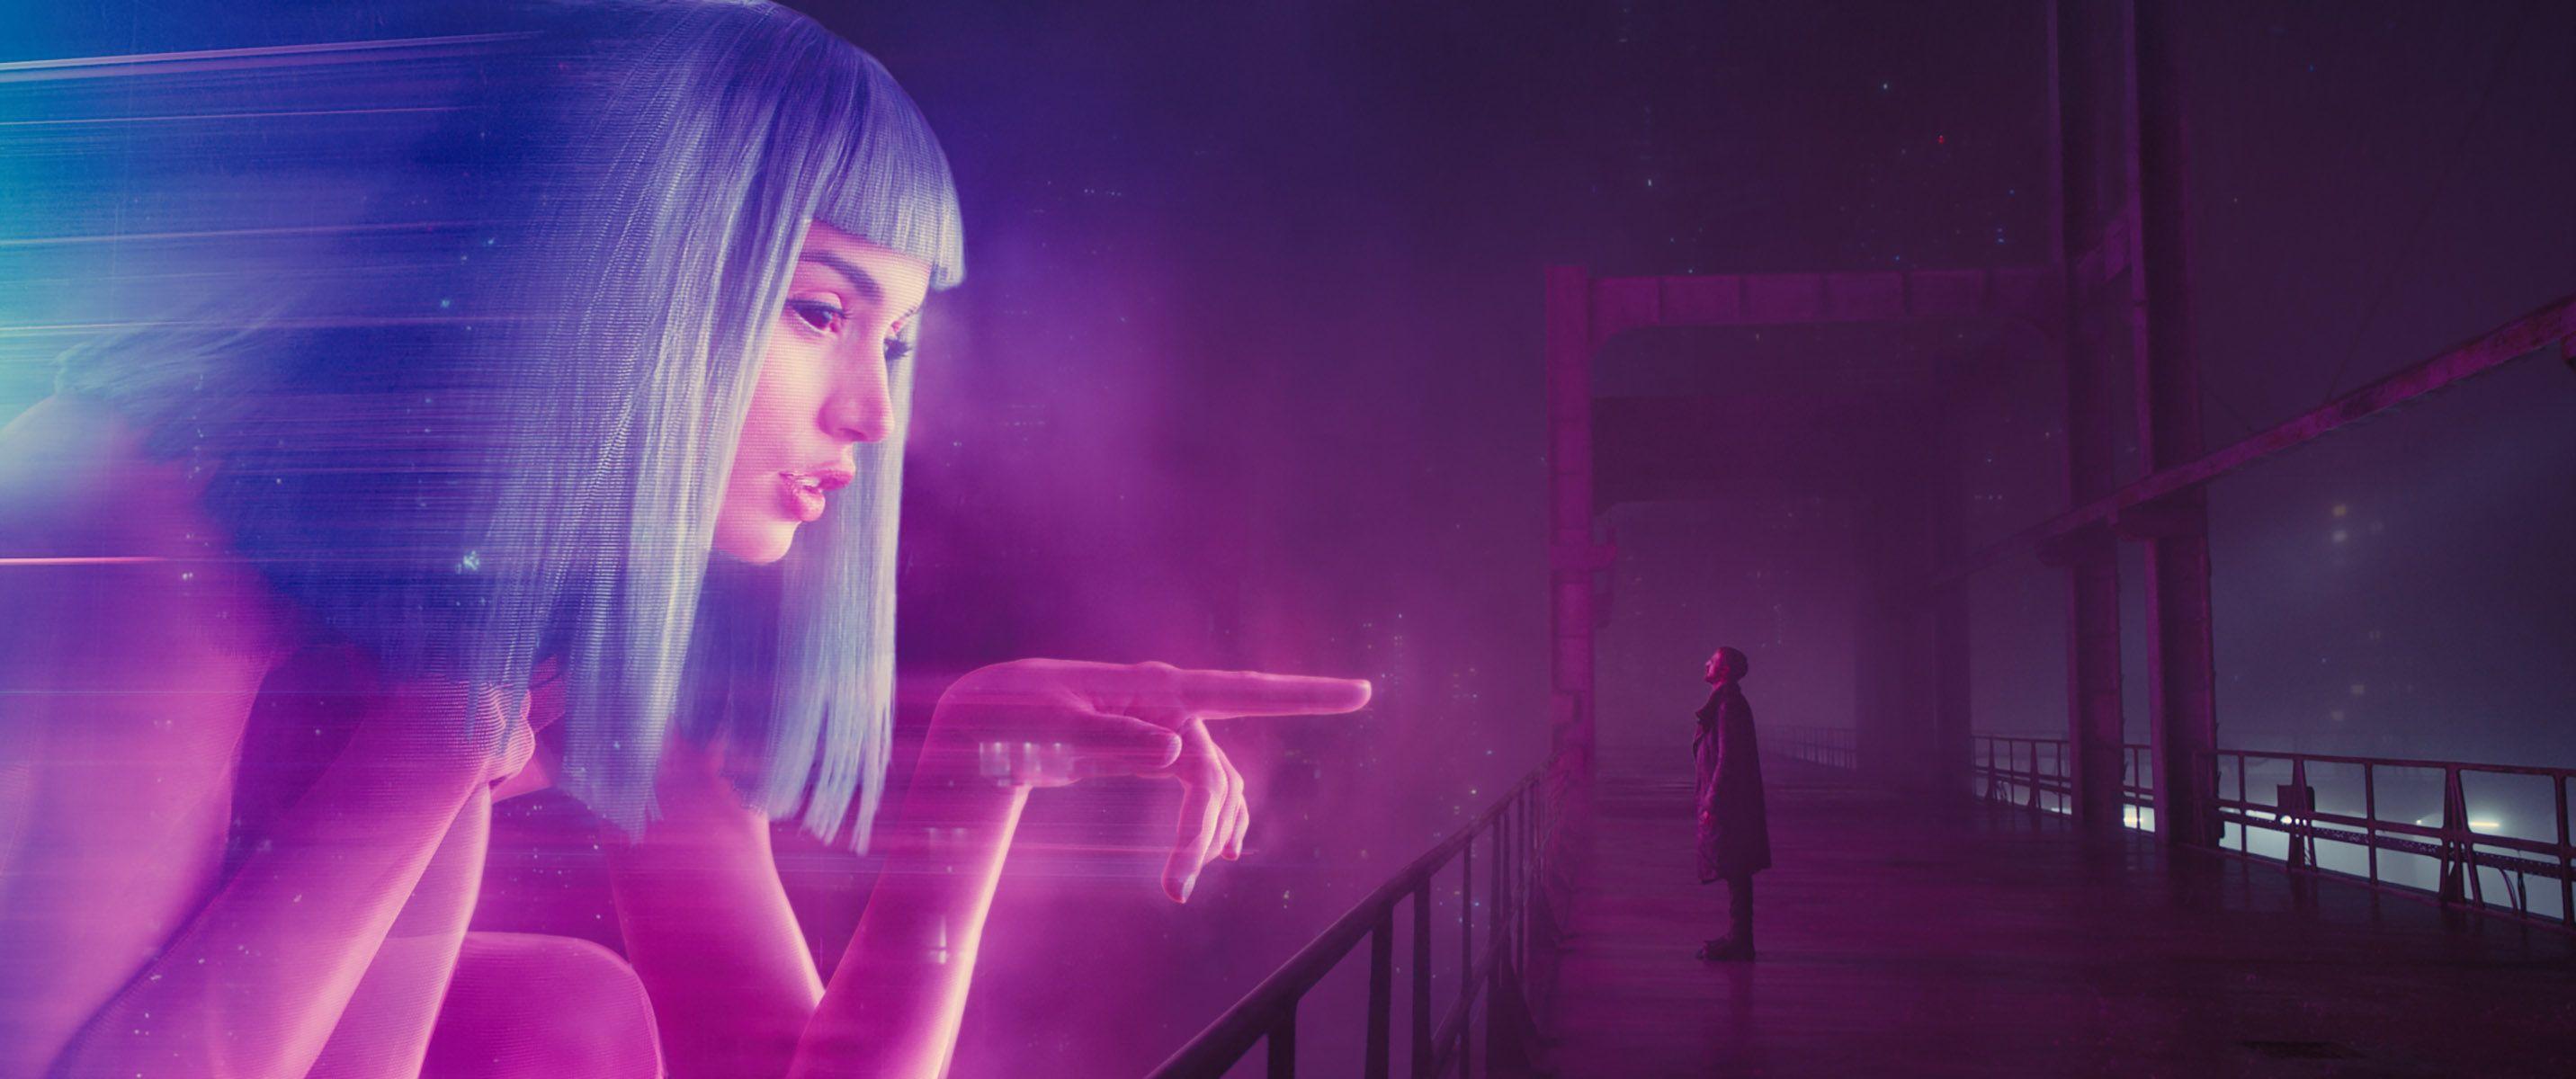 Blade Runner 2049 Image Tease Denis Villeneuve's Sci Fi Spectacle